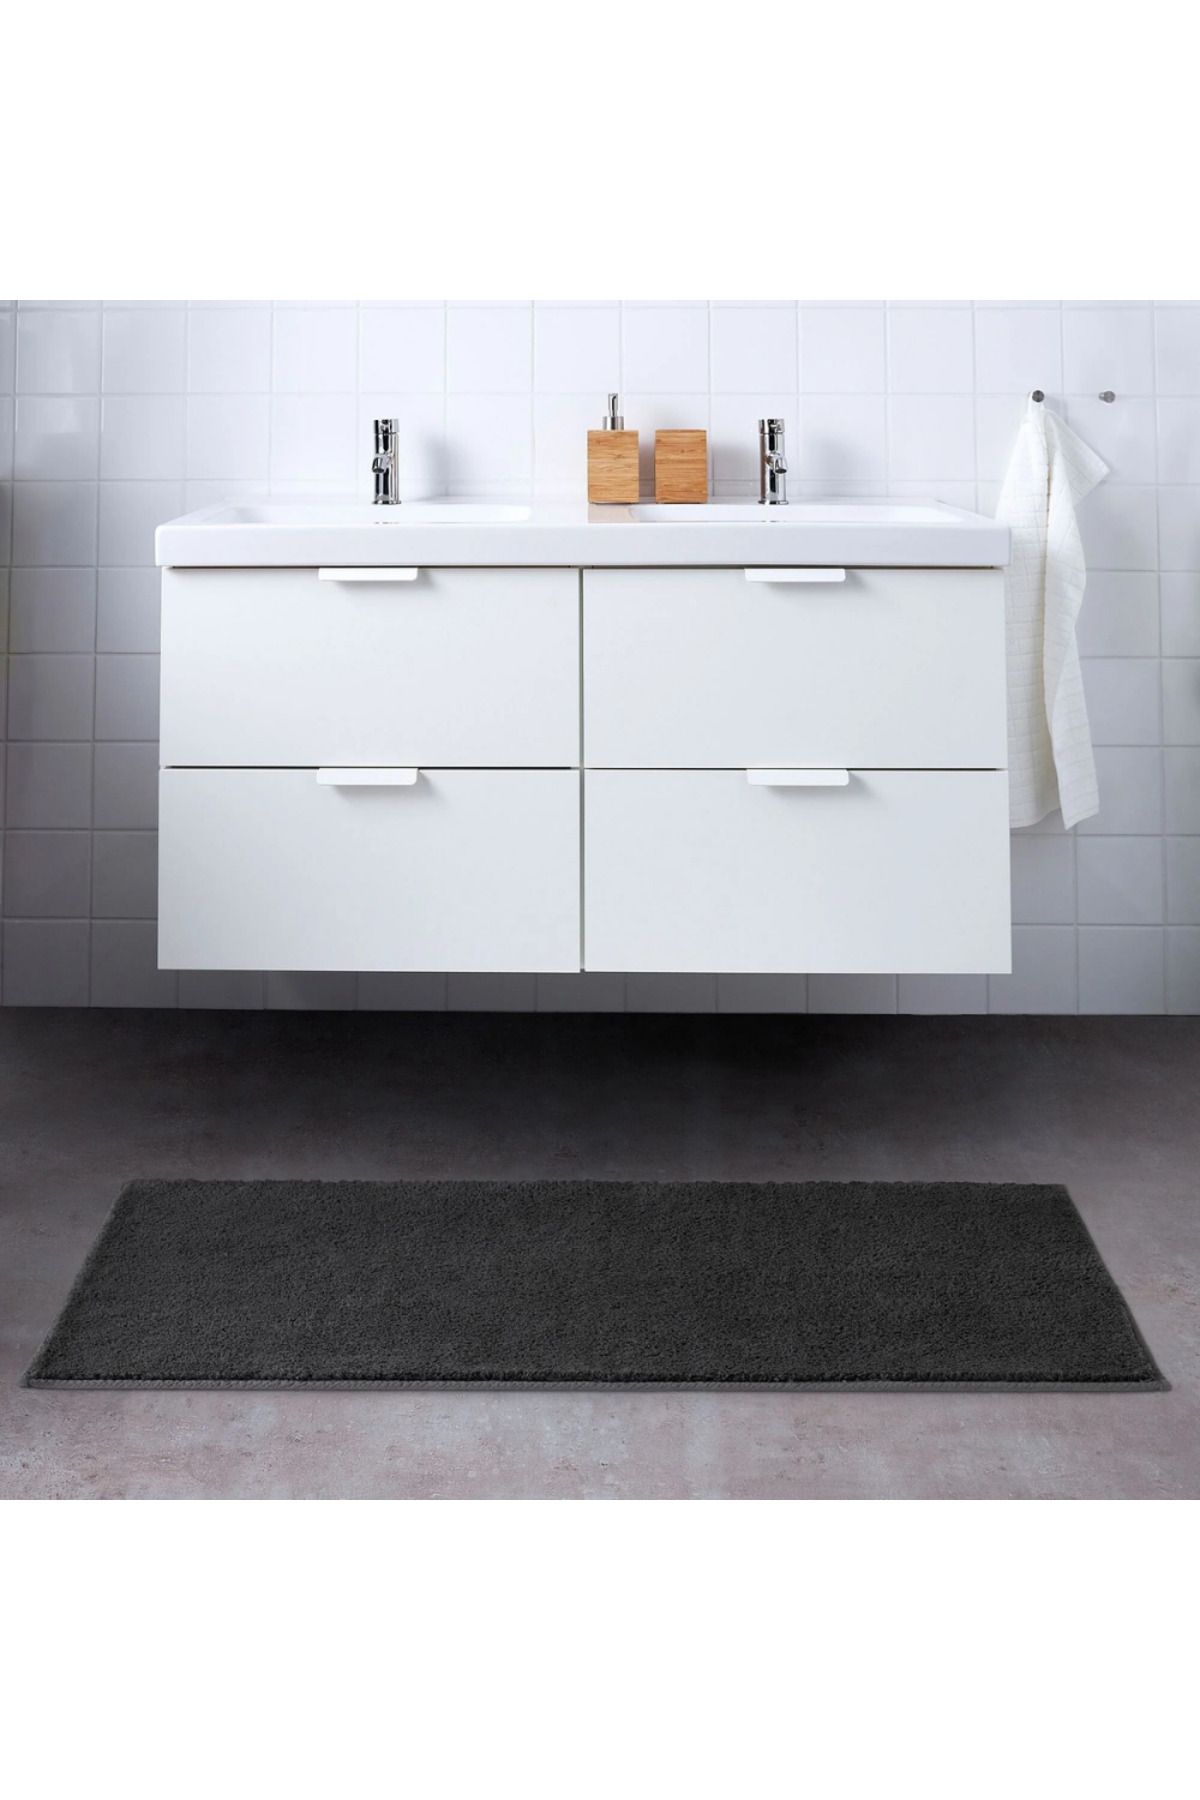 IKEA Södersjön Banyo Paspası Koyu Gri 60X120 Cm 40550482